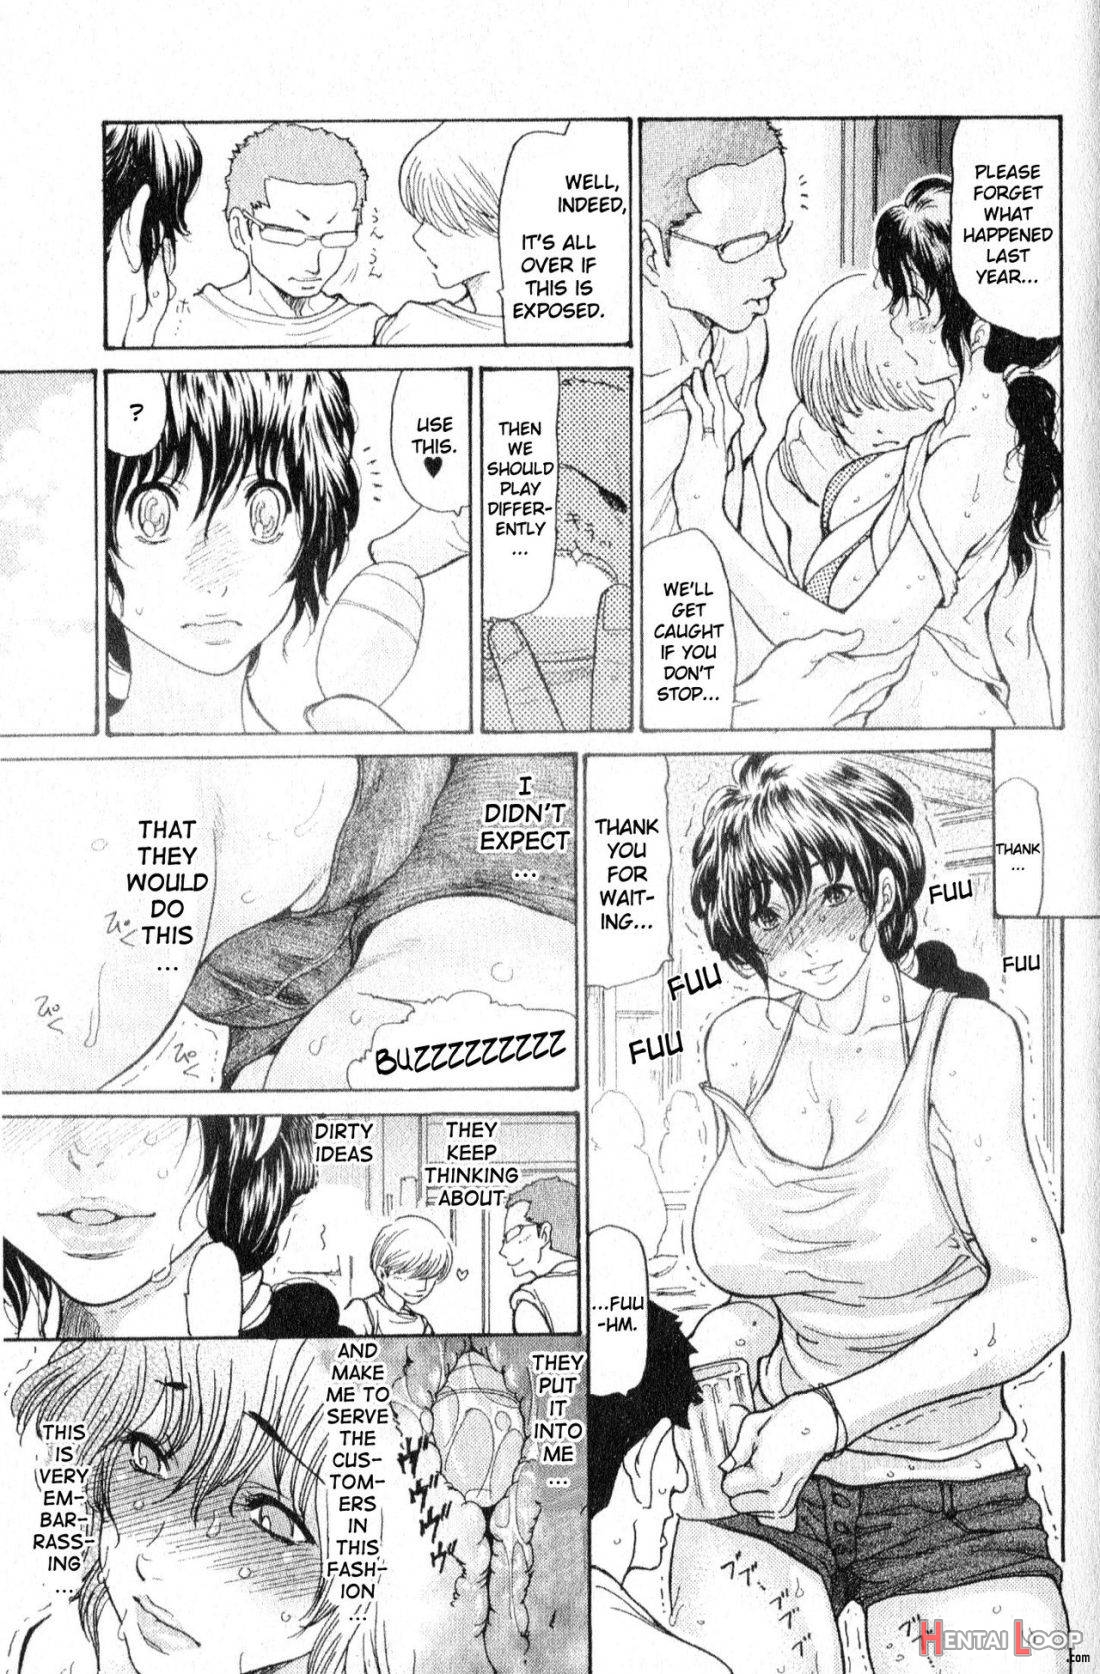 Umi no Yeah!! 2010 page 3